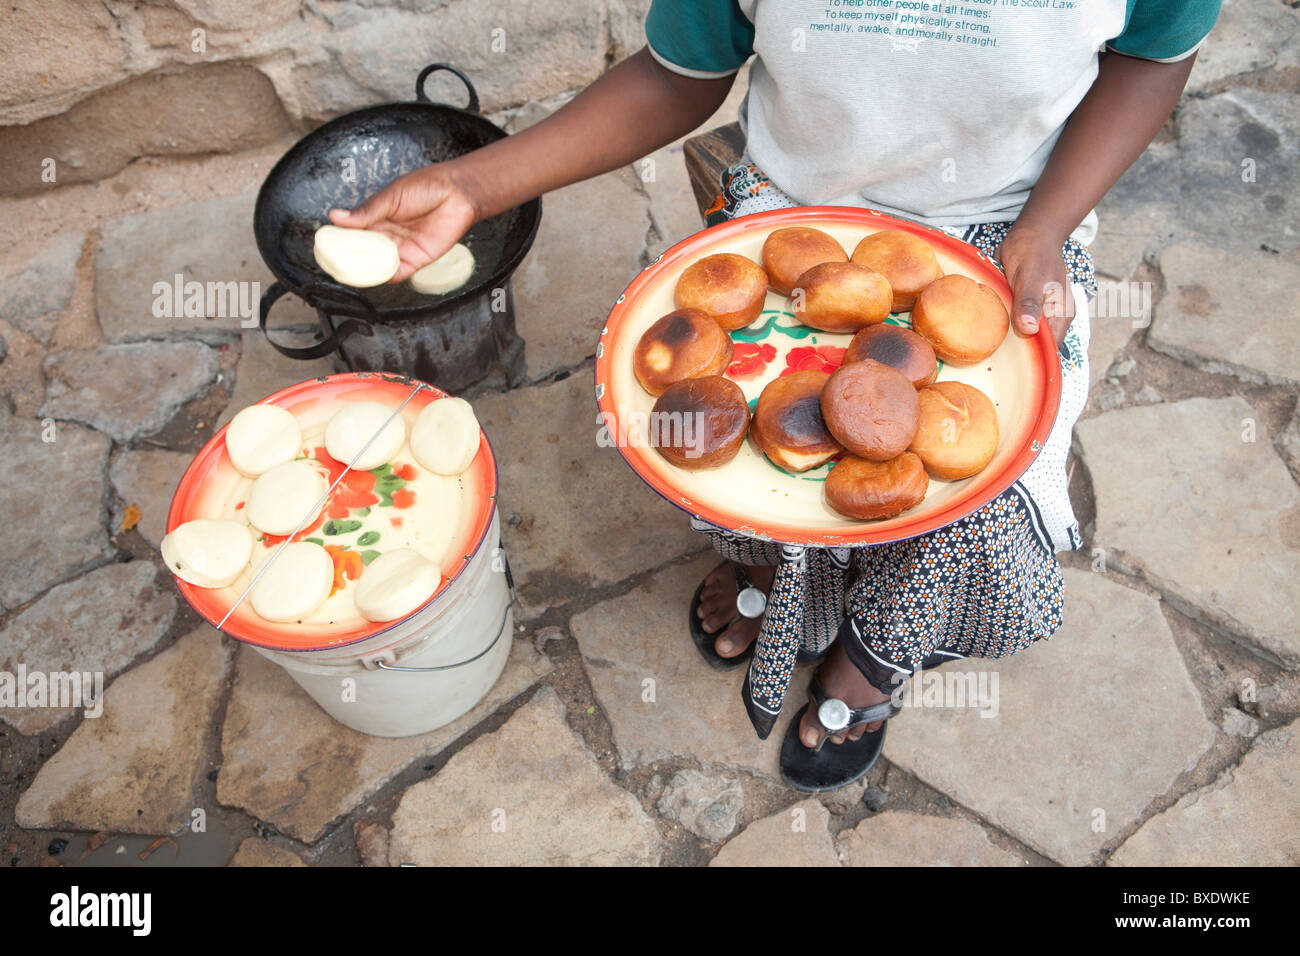 Eine junge Frau kocht Mandazi (Krapfen) auf den Straßen von Dodoma, Tansania, Ostafrika. Stockfoto